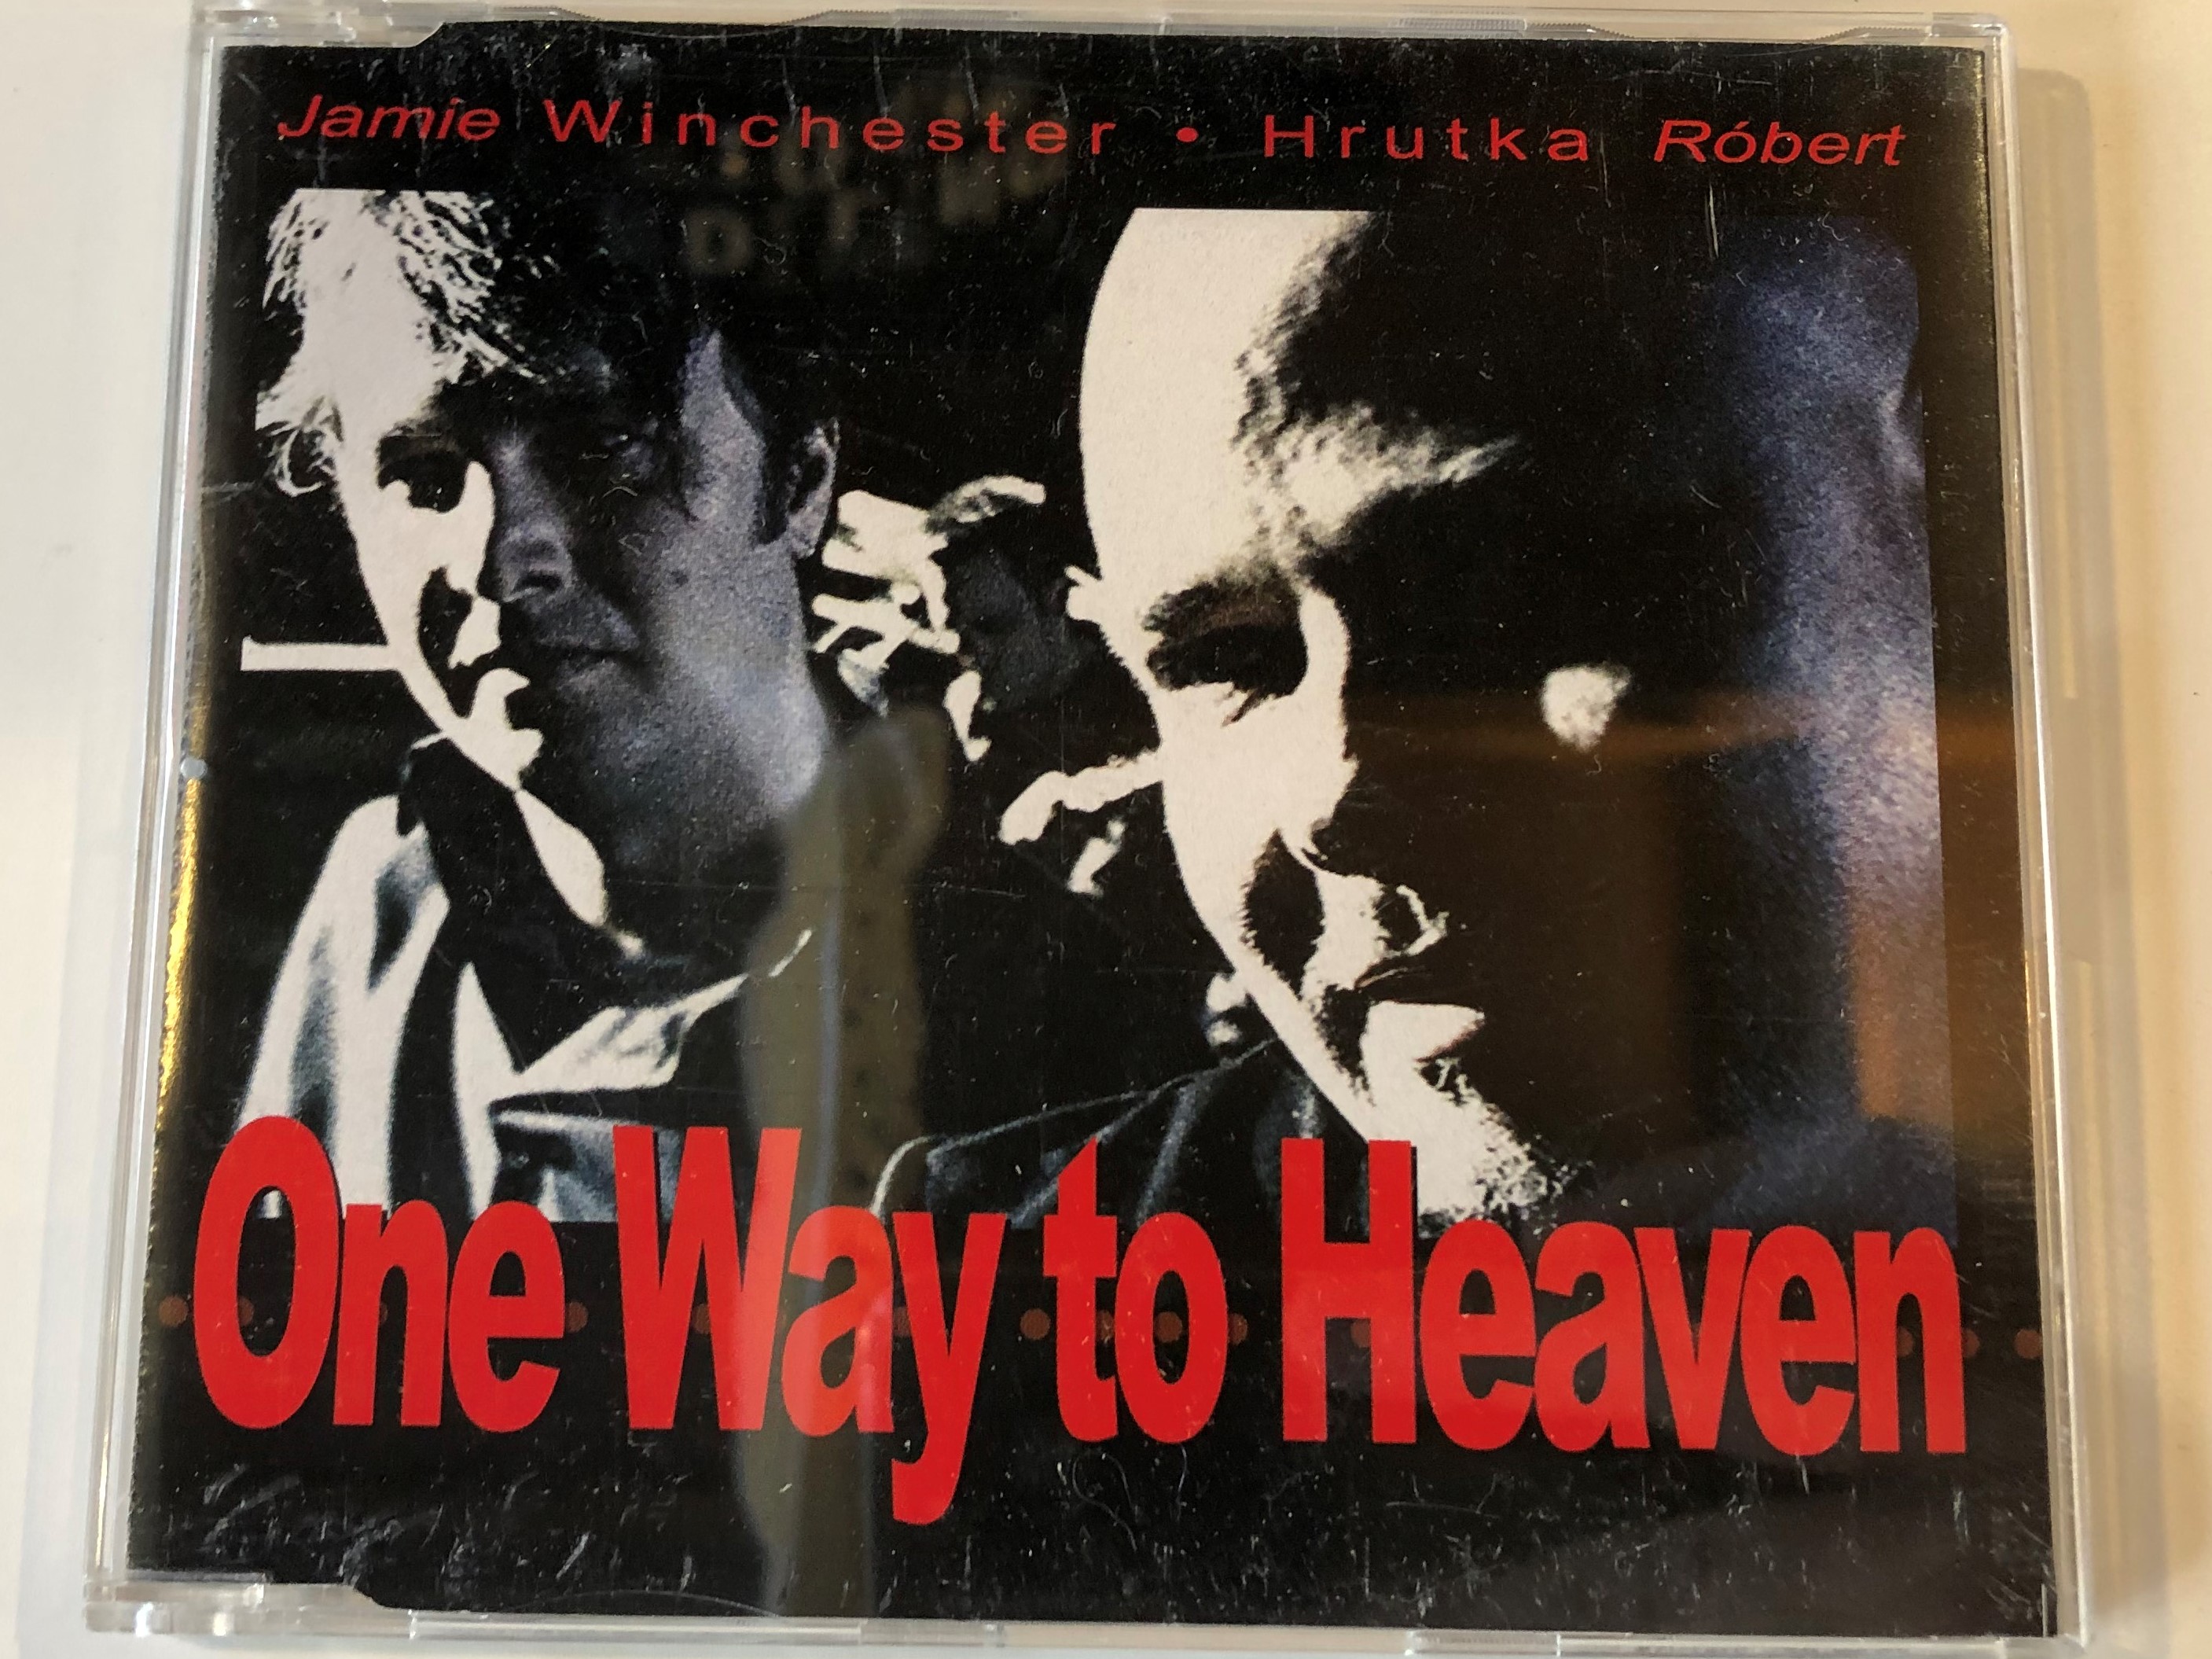 jamie-winchester-hrutka-r-bert-one-way-to-heaven-tom-tom-records-audio-cd-2003-ttcd-51-1-.jpg